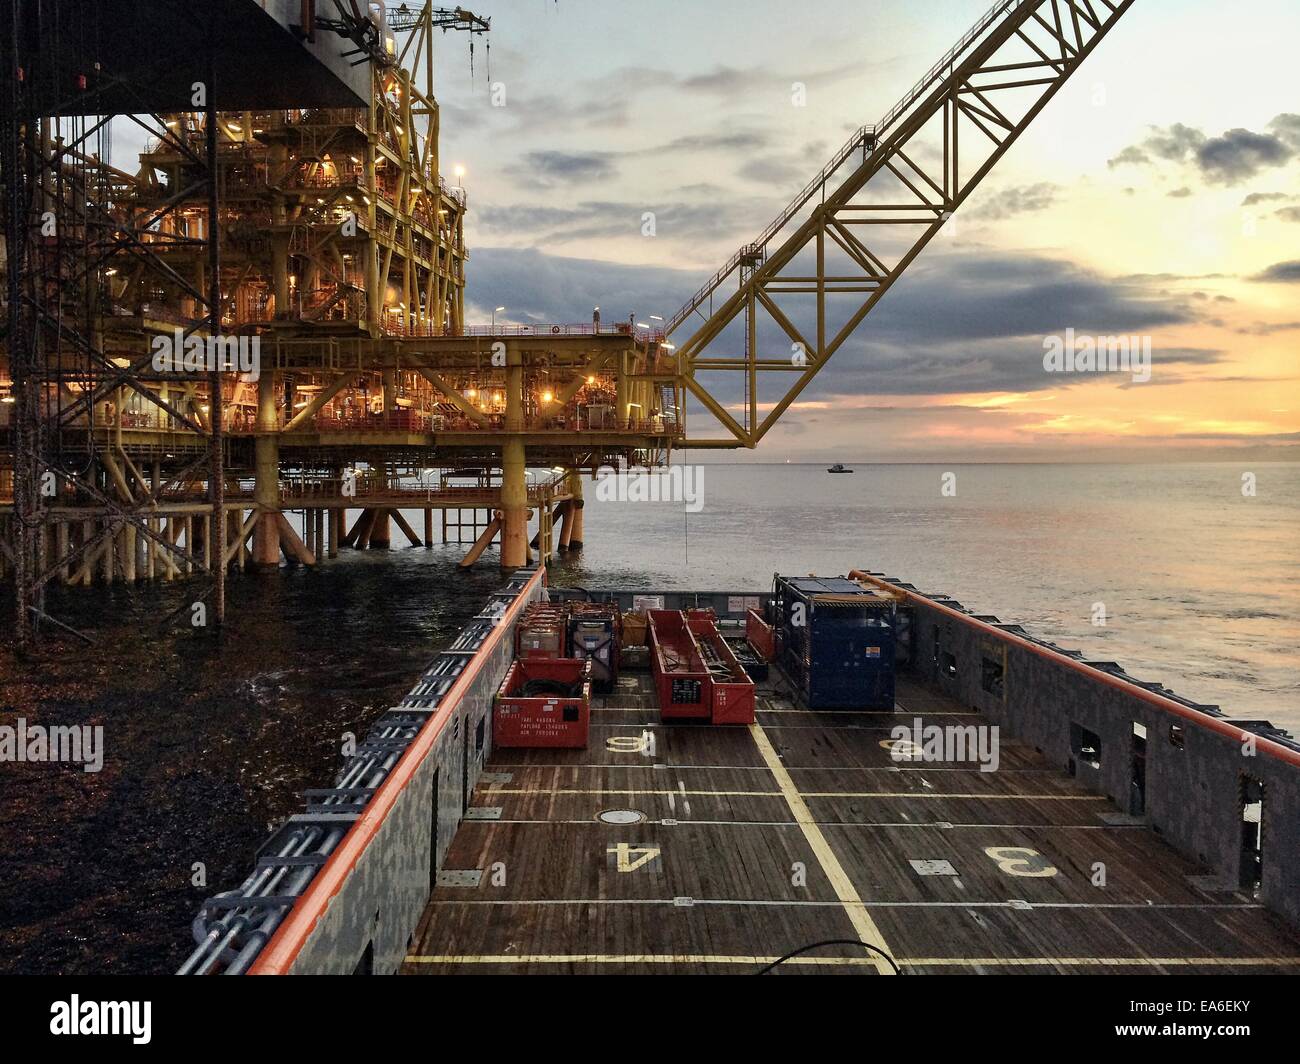 Nautikschiff nähert sich bei Sonnenaufgang einer Ölplattform Stockfoto